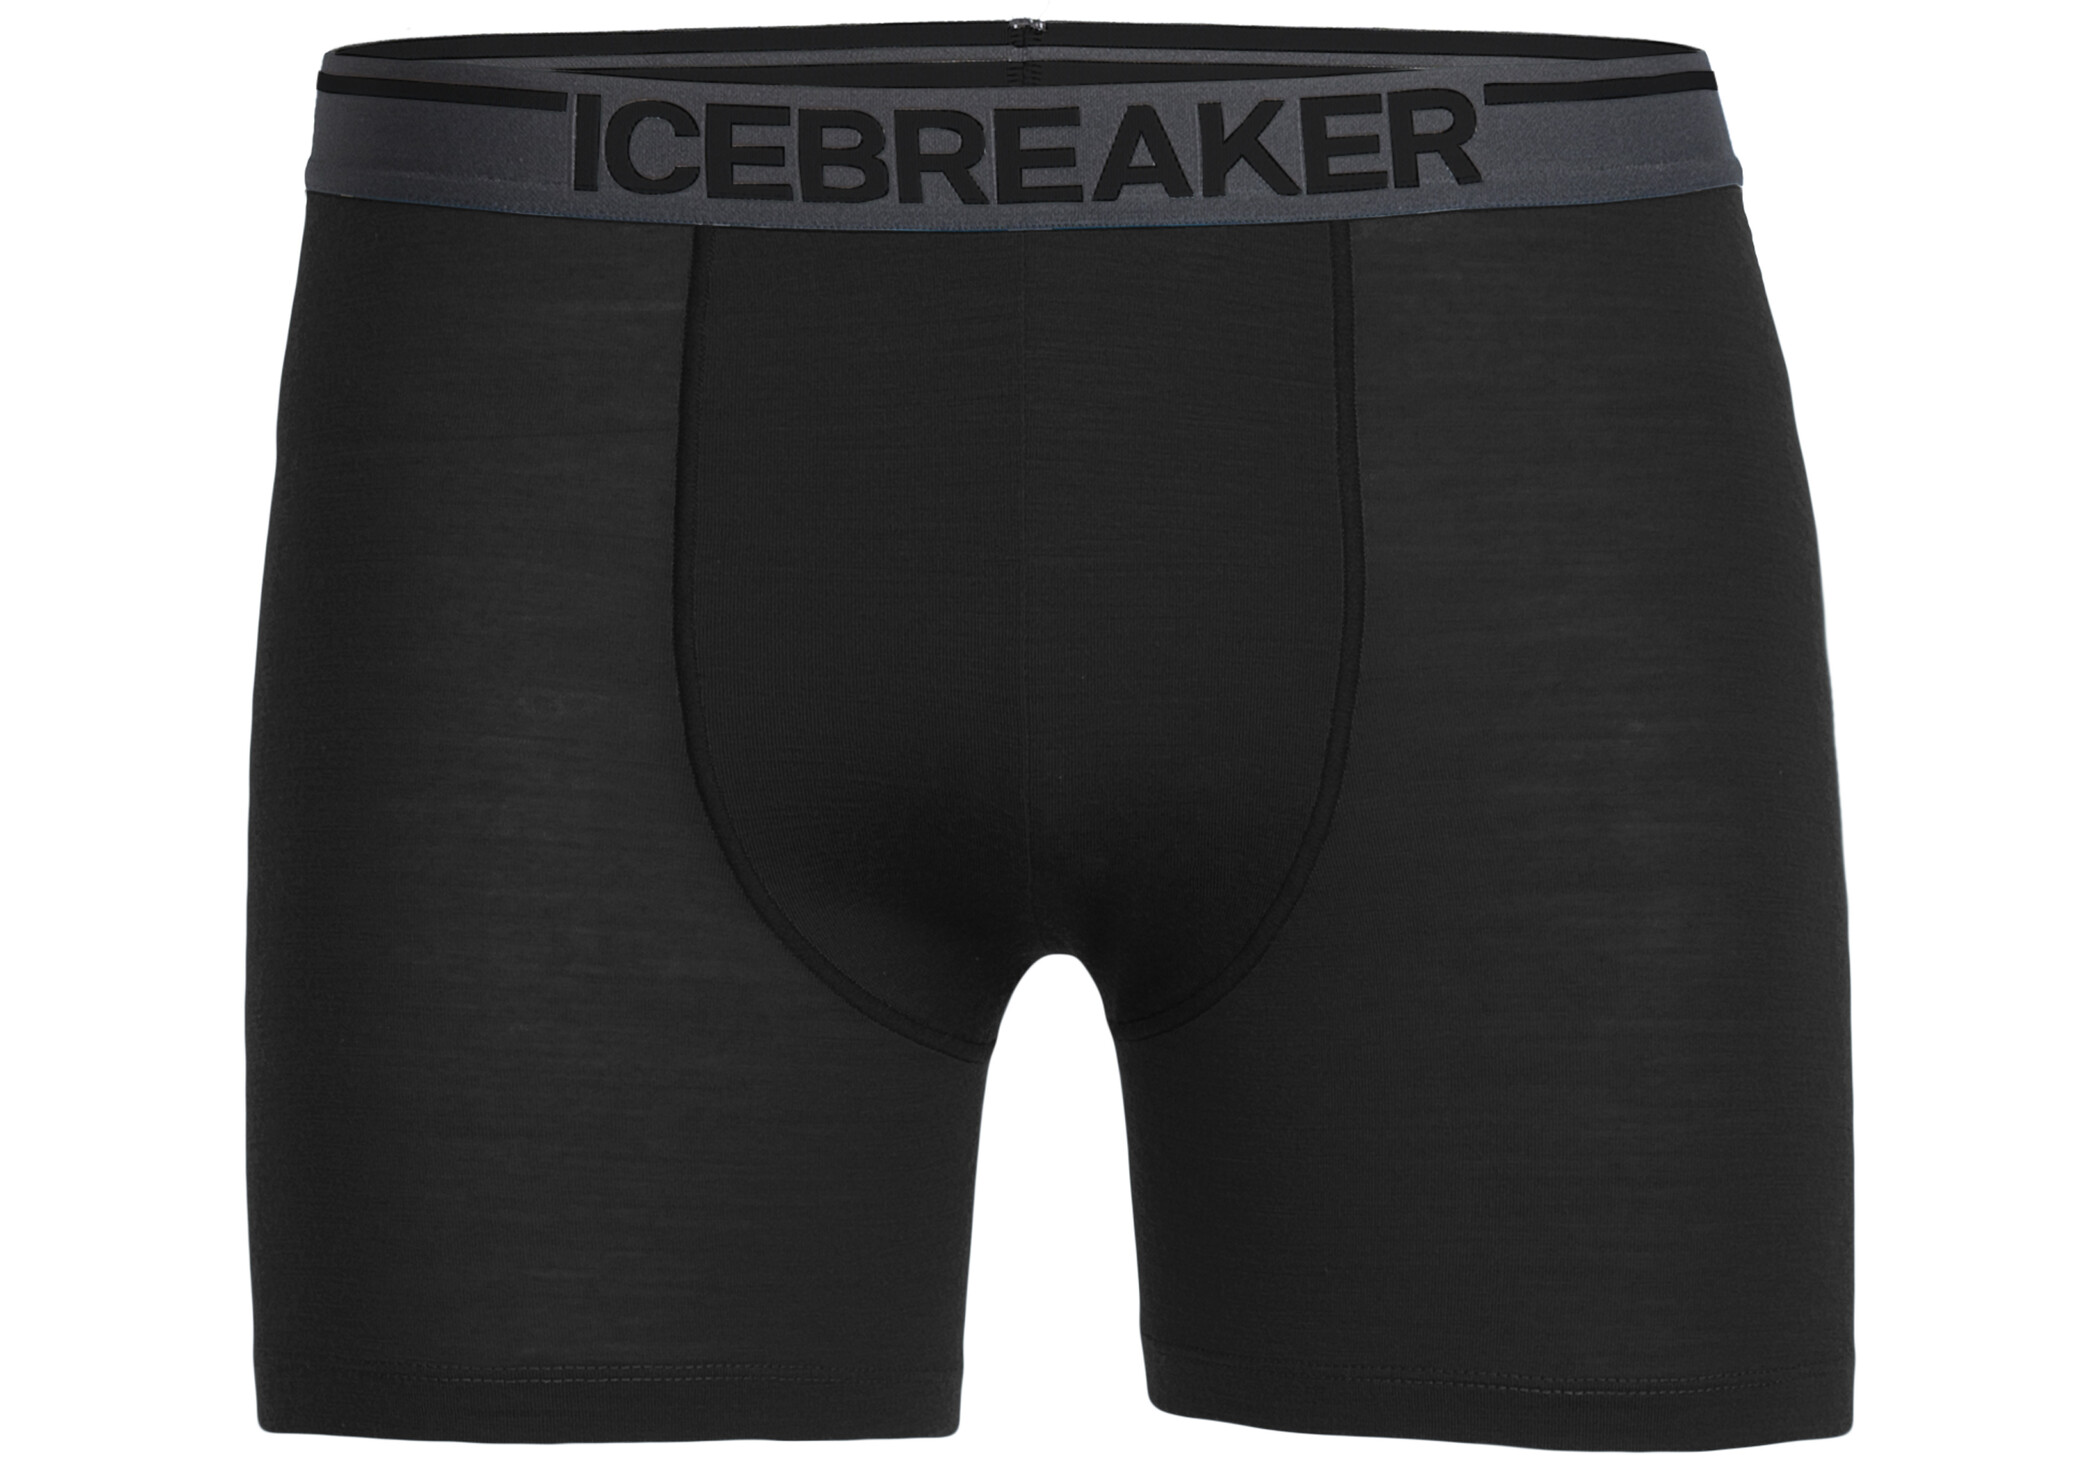 Icebreaker Anatomica Boxers Men black